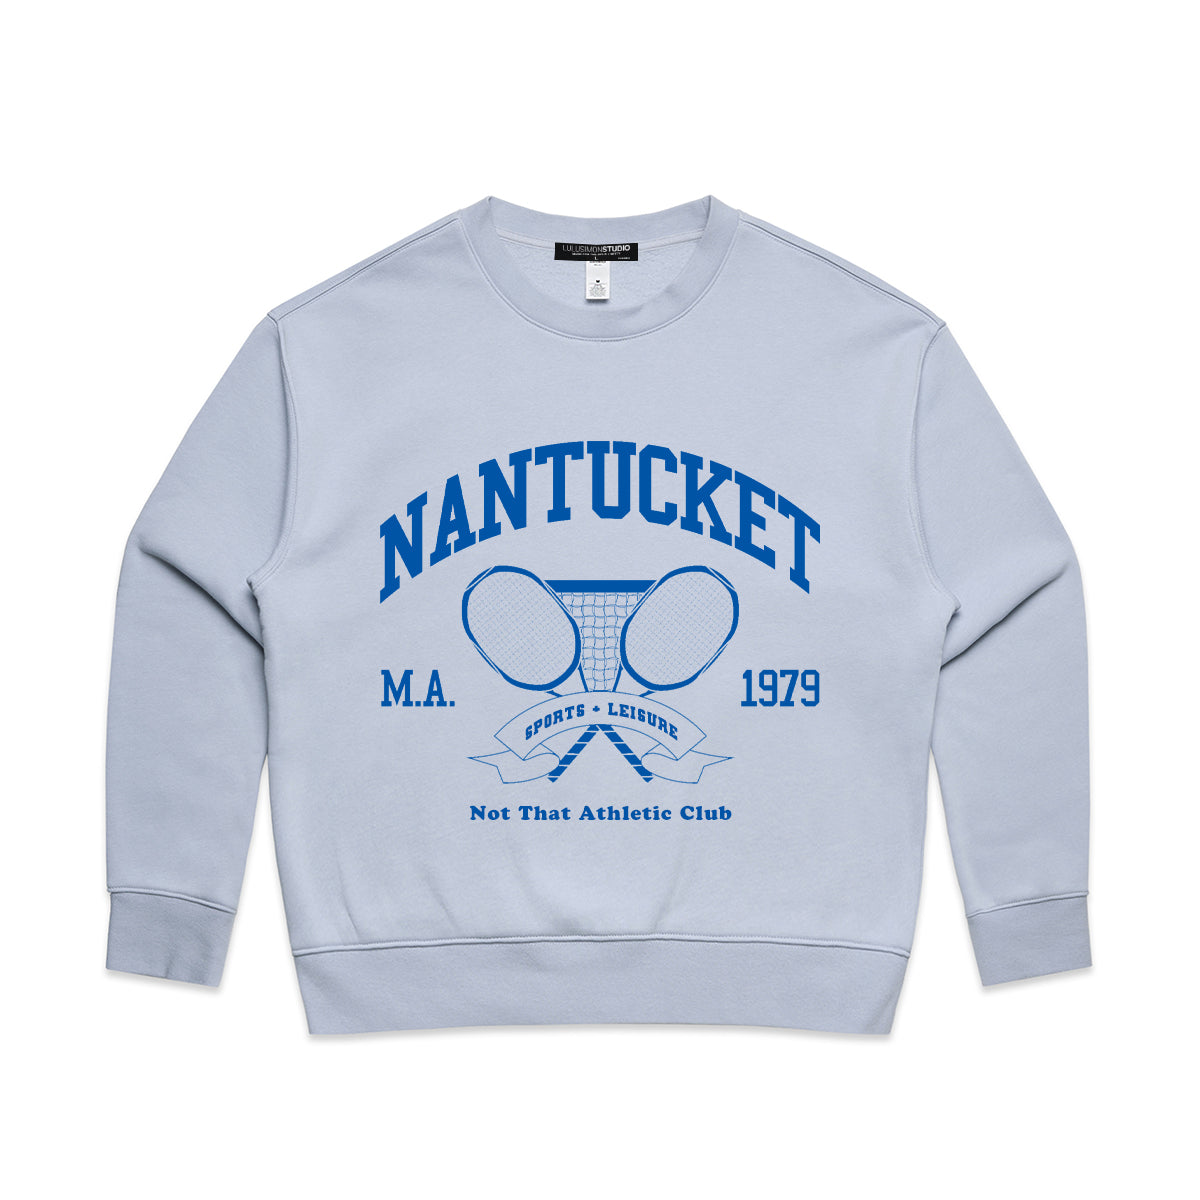 Nantucket Not That Athletic Club Sweatshirt